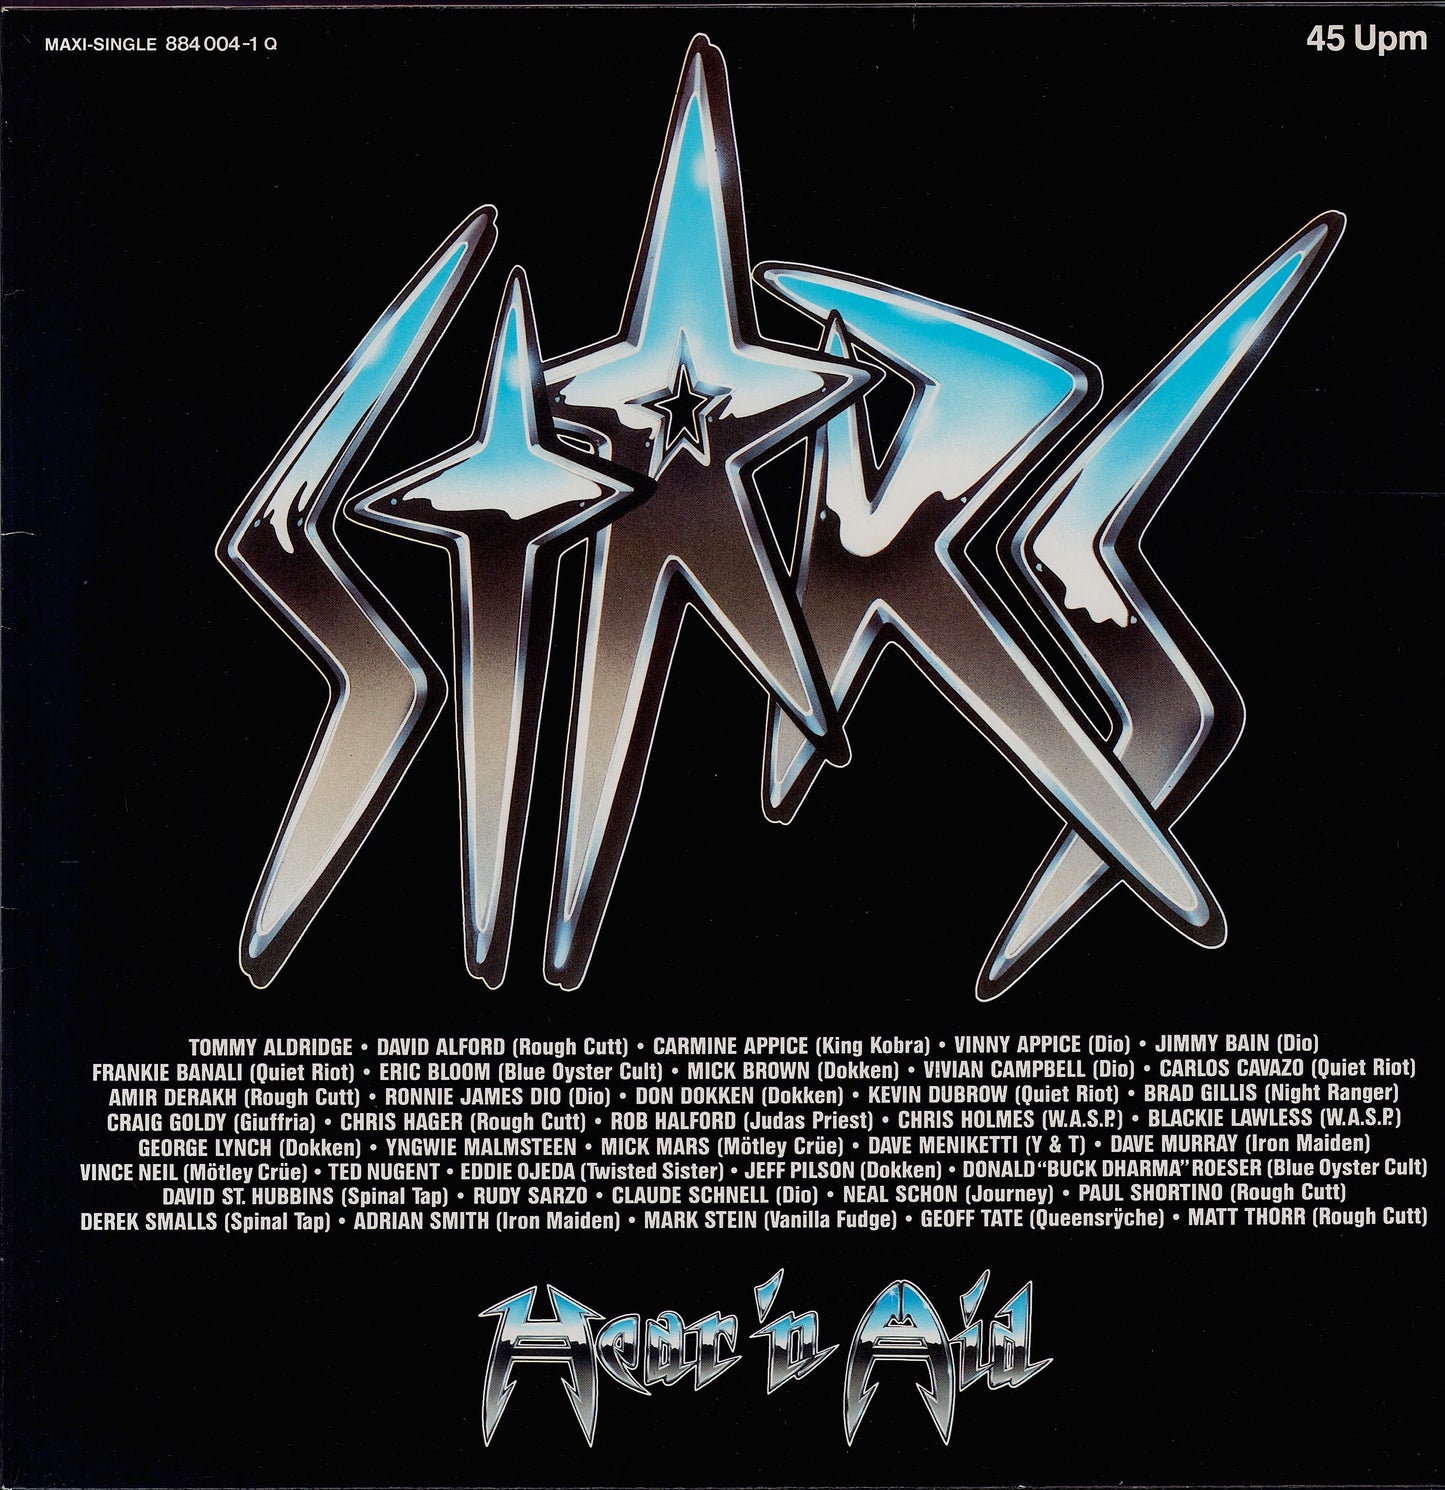 Hear'n Aid ‎- Stars Vinyl 12"